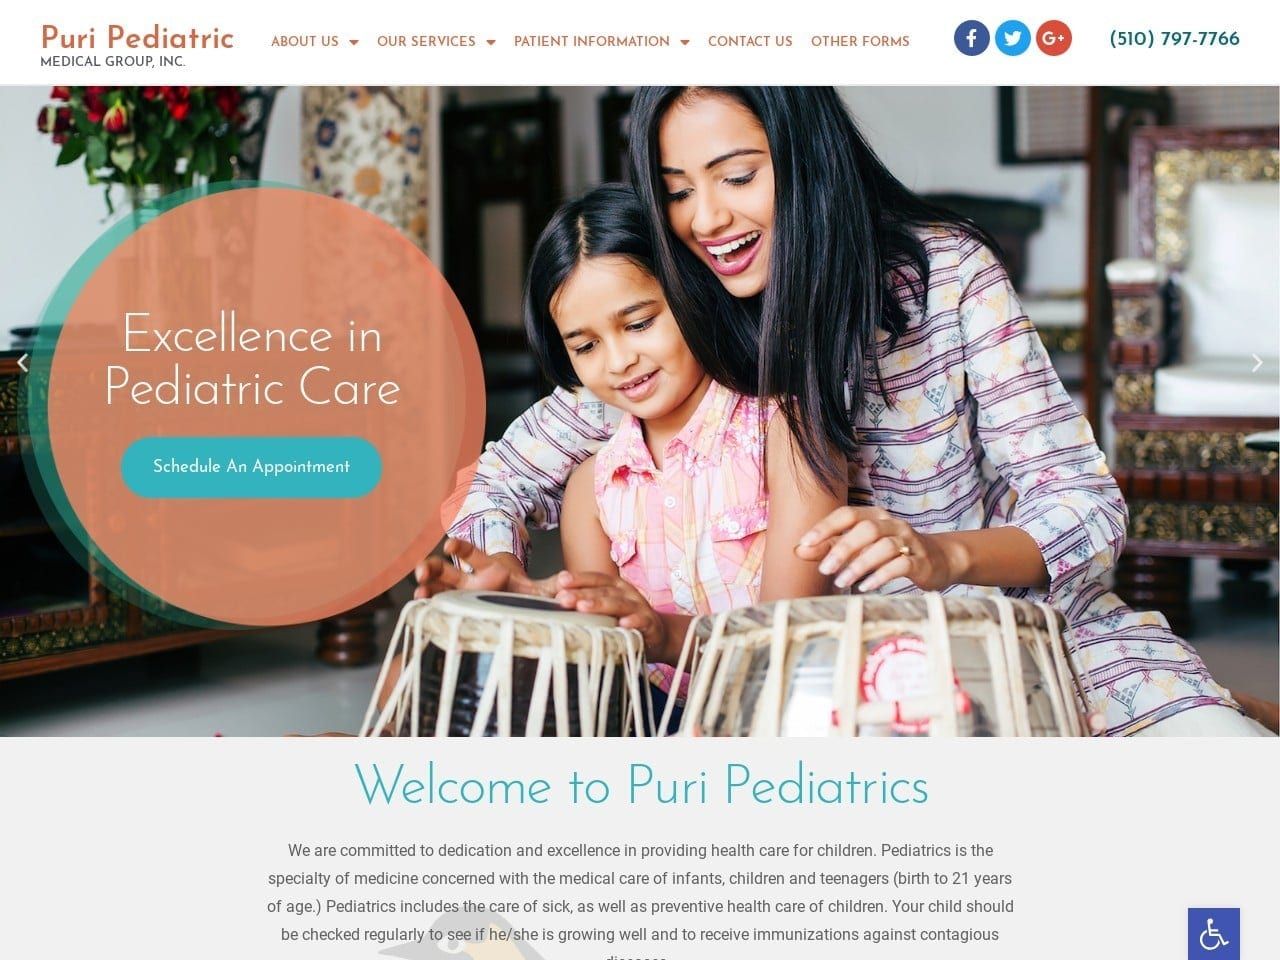 Puri Pediatric Medical Group Website Screenshot From Url Puripeds.com